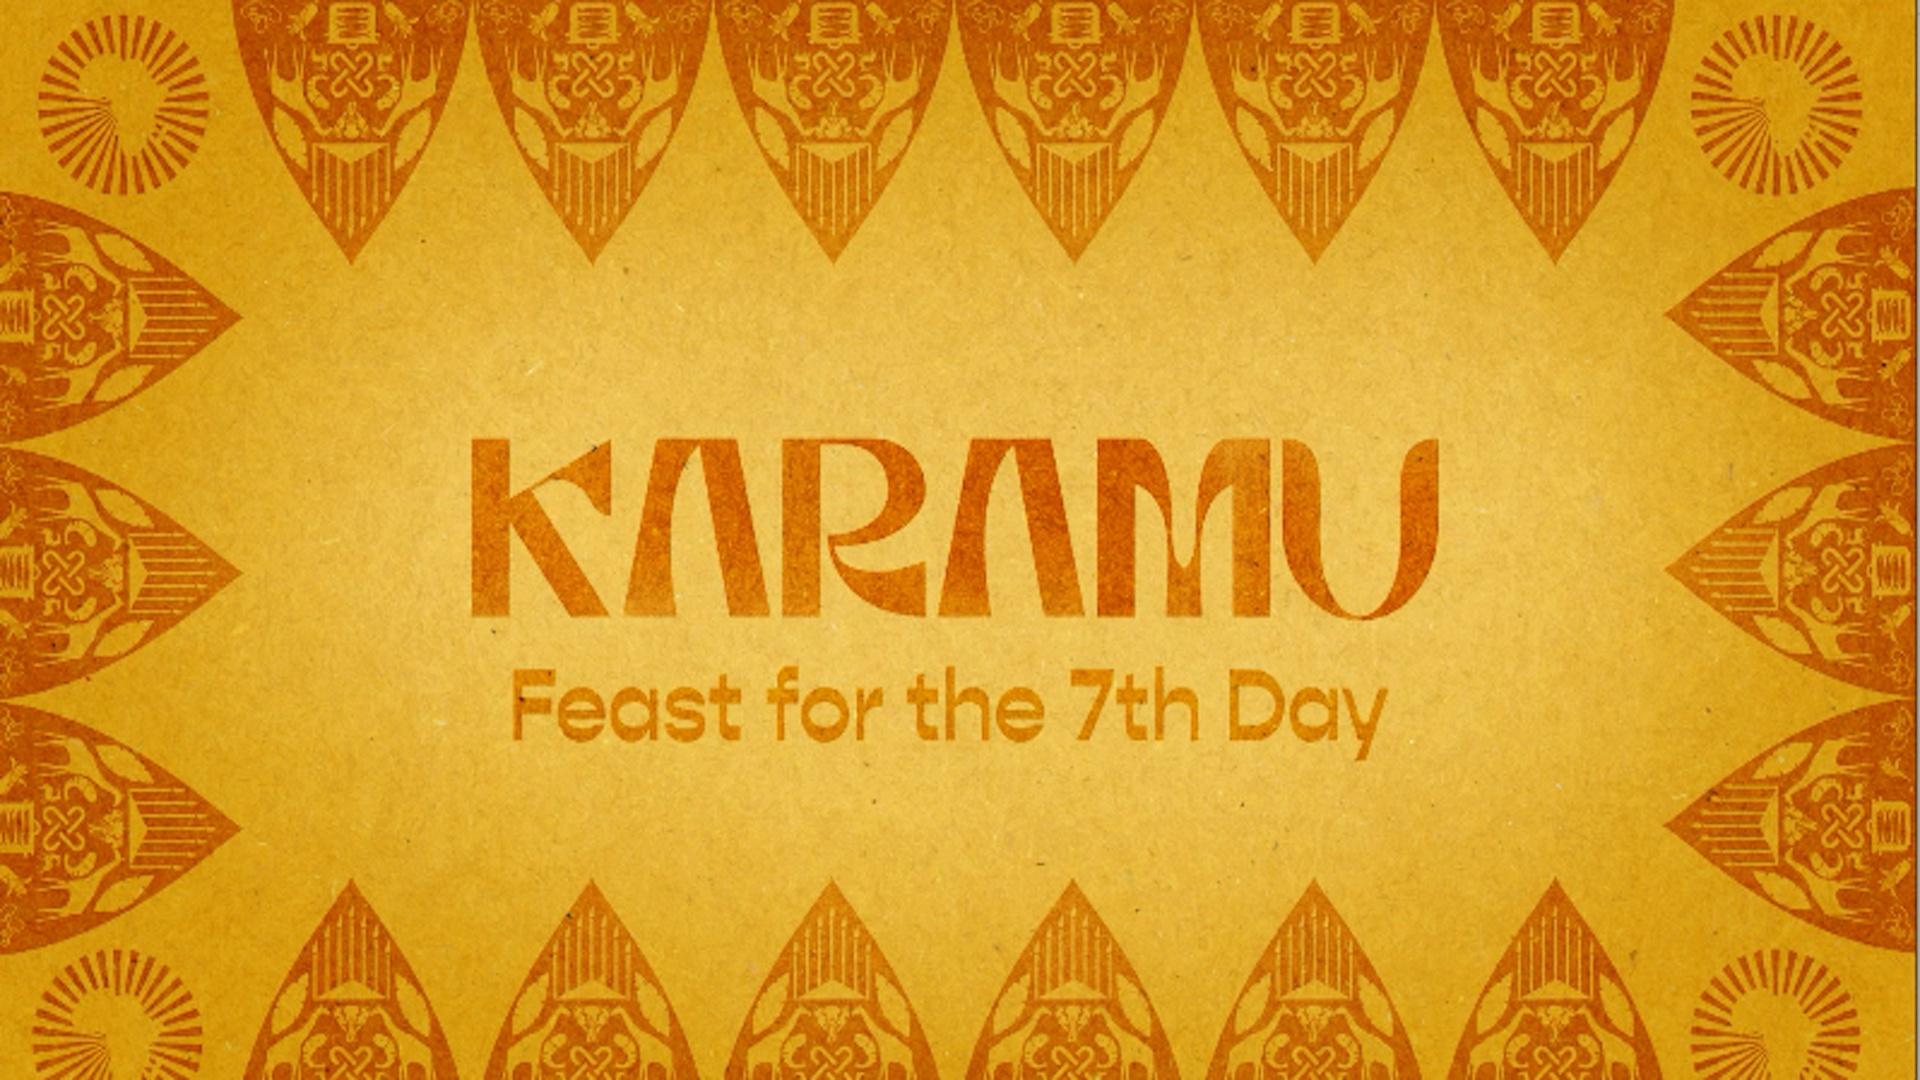 Karamu: Feast for the 7th Day